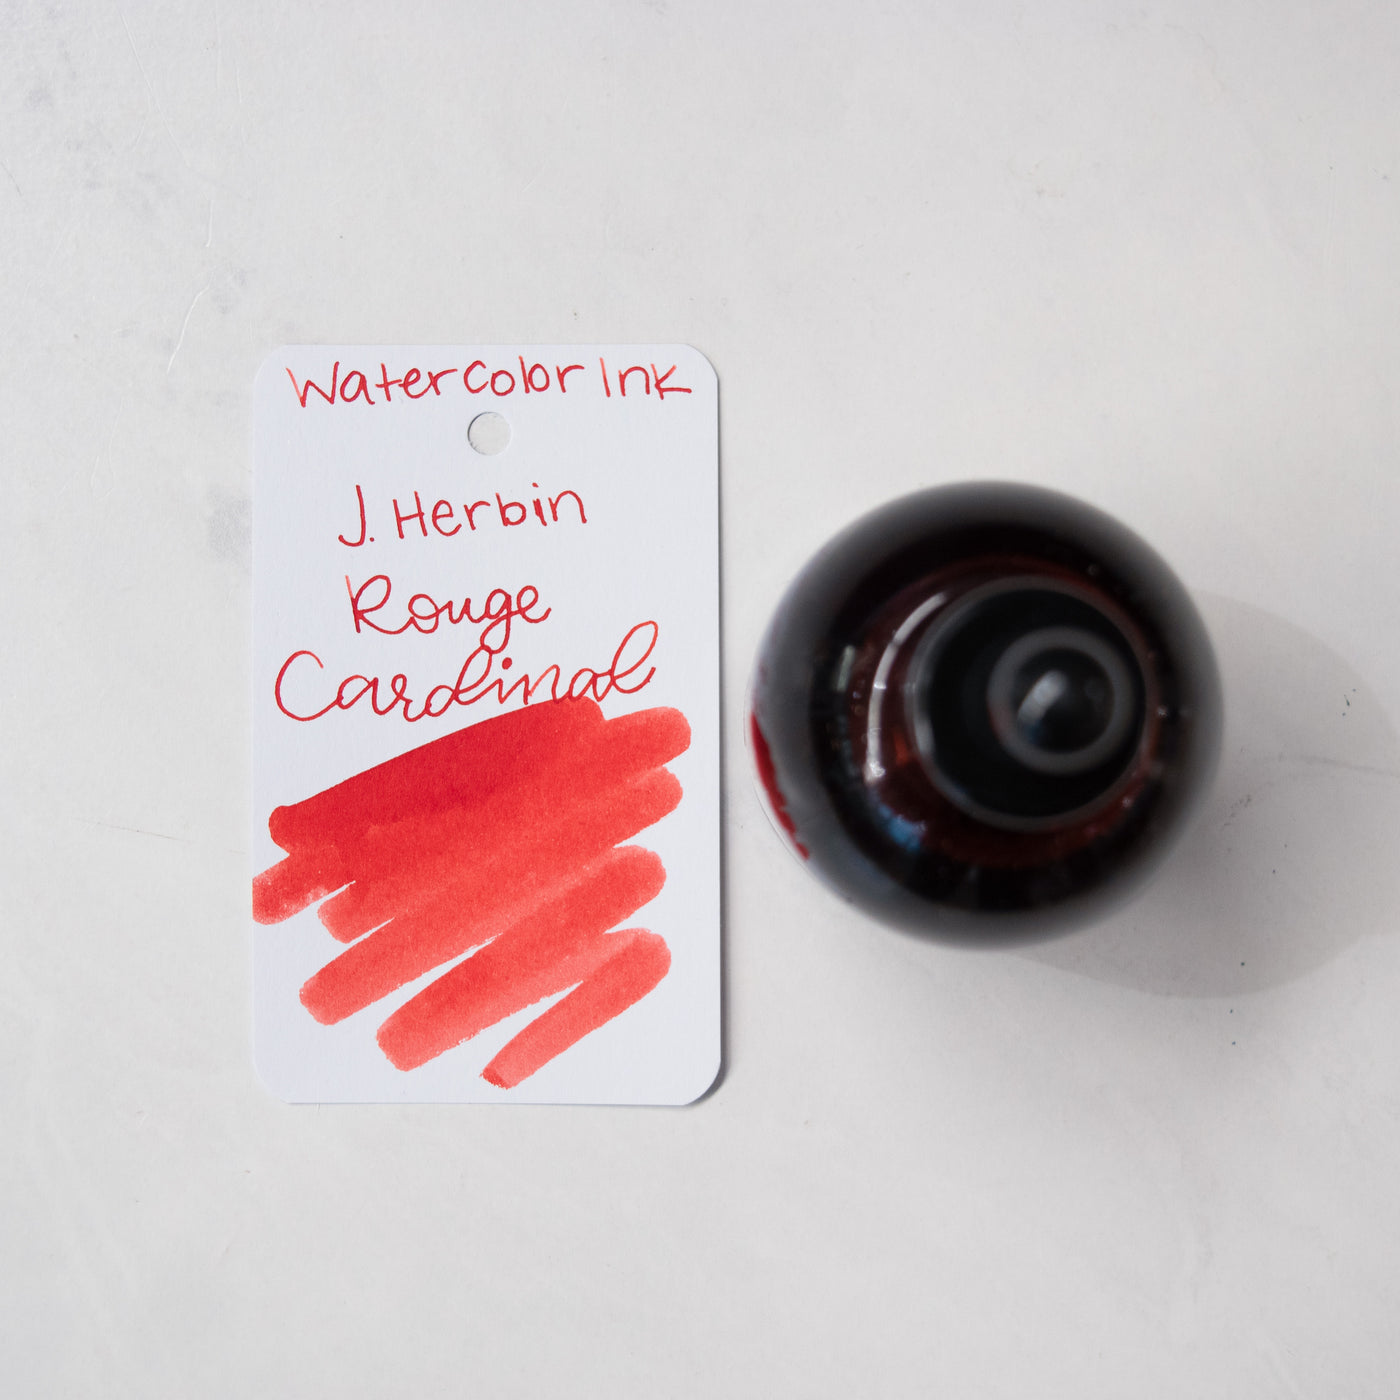 Jacques Herbin Eclats Fine Art Rouge Cardinal Watercolor Ink Bottle